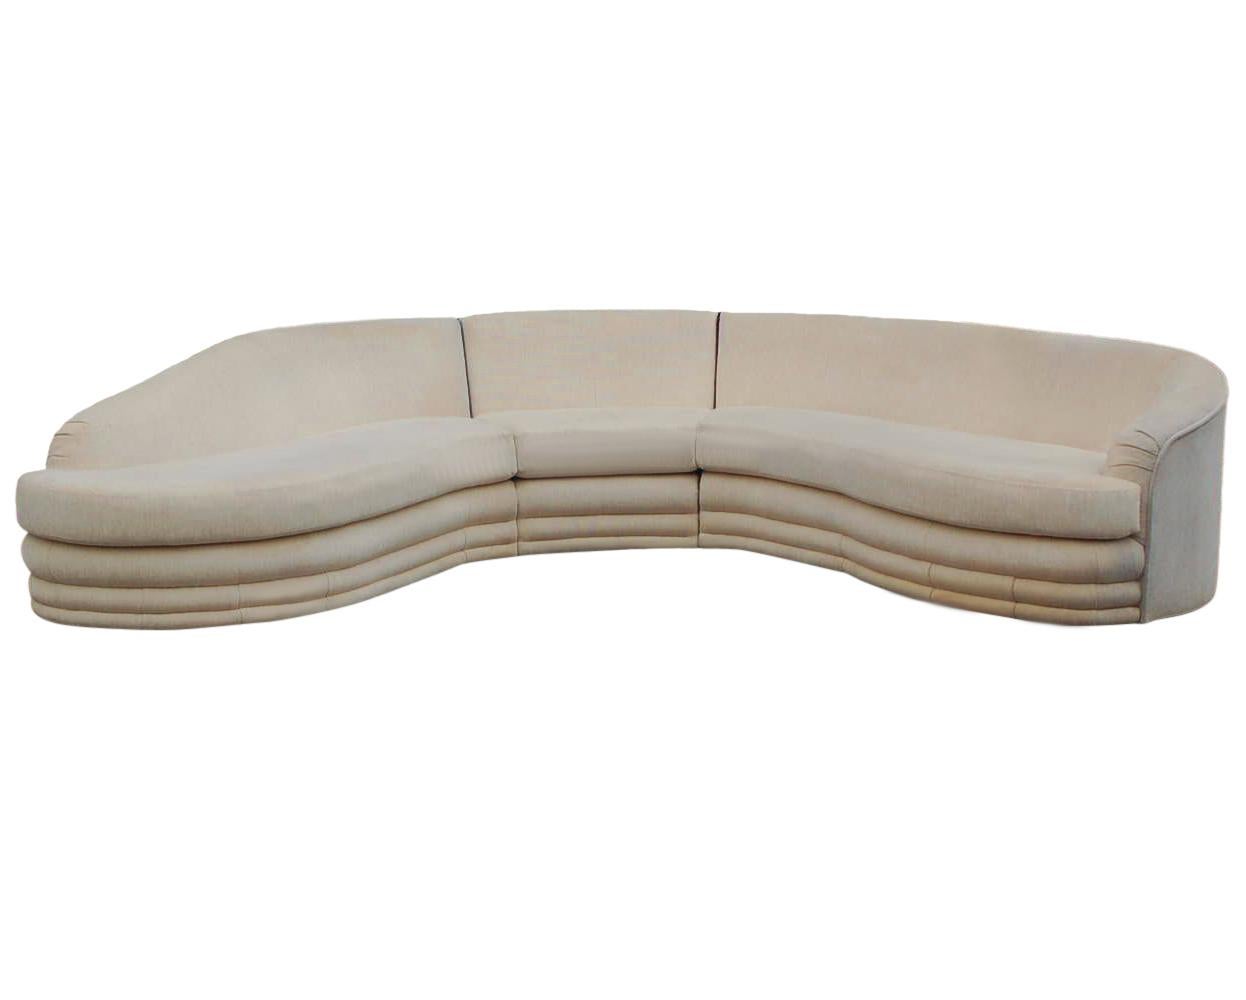 curved mid century modern sofa